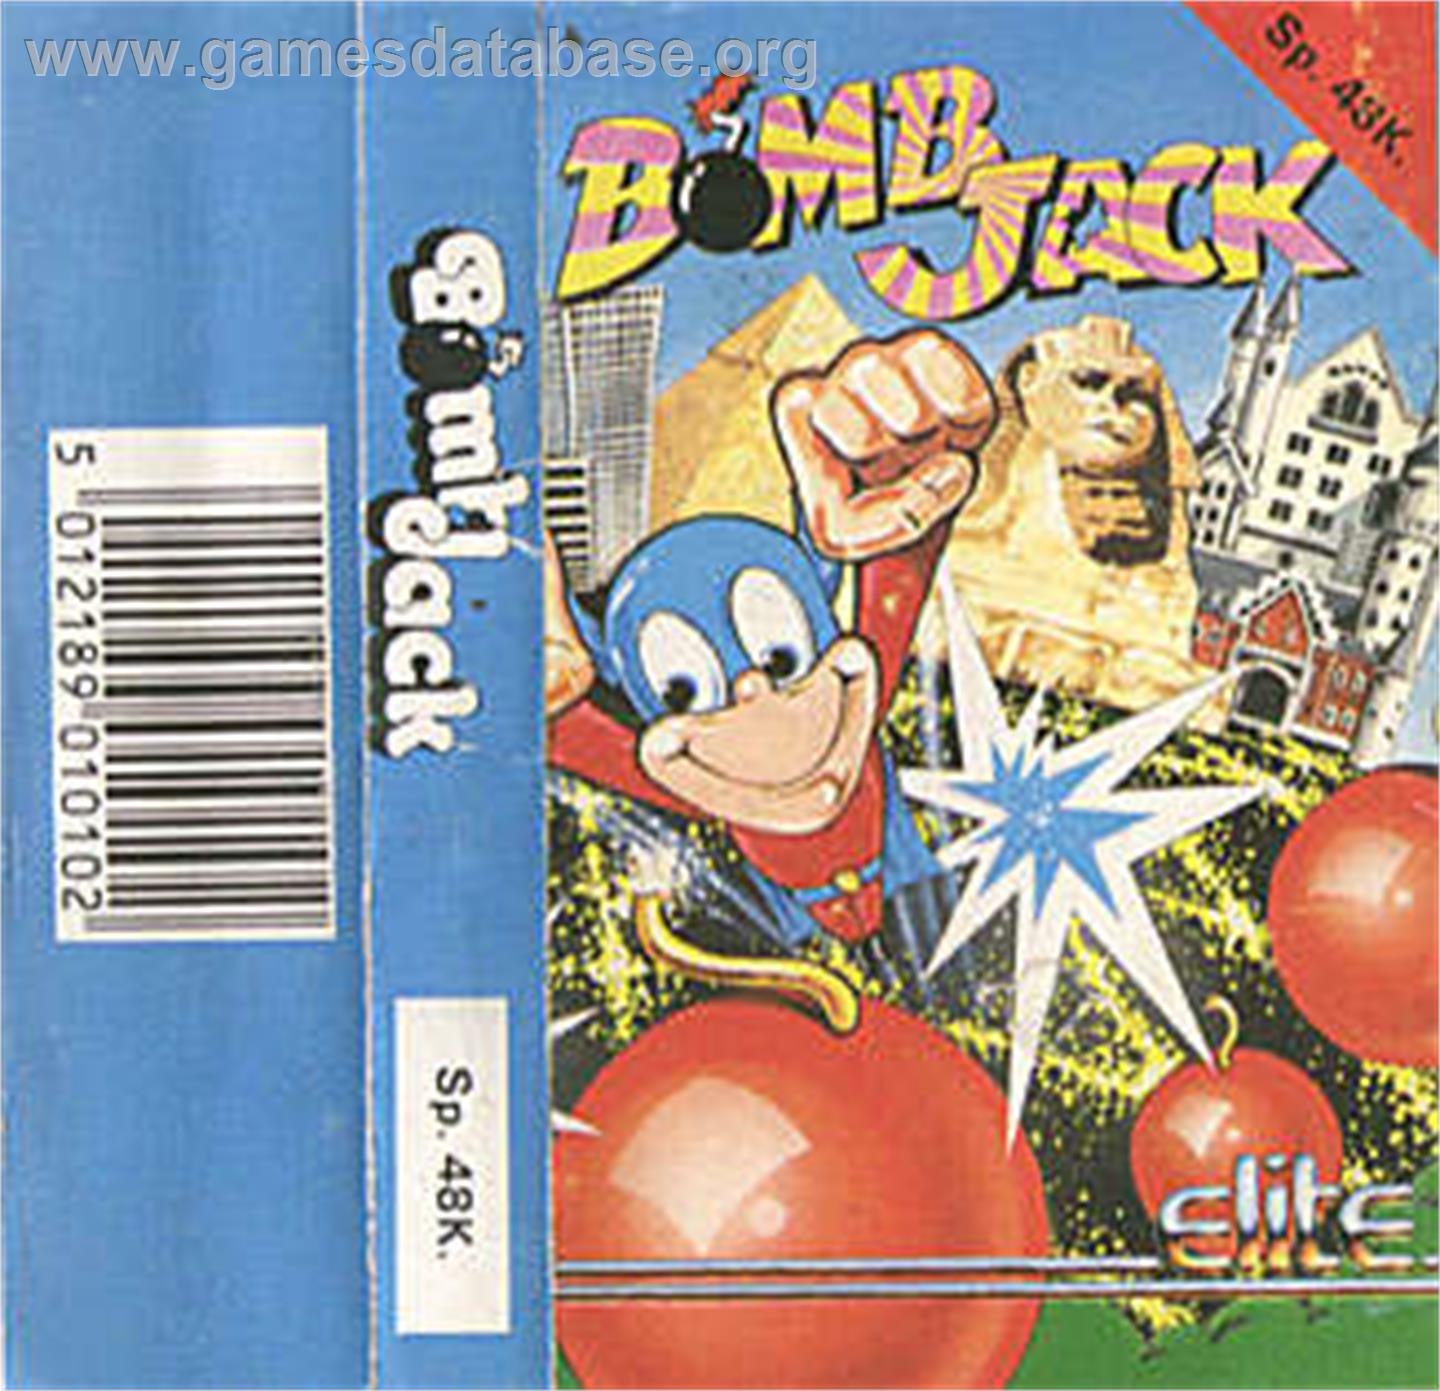 Bomb Jack - Sinclair ZX Spectrum - Artwork - Box